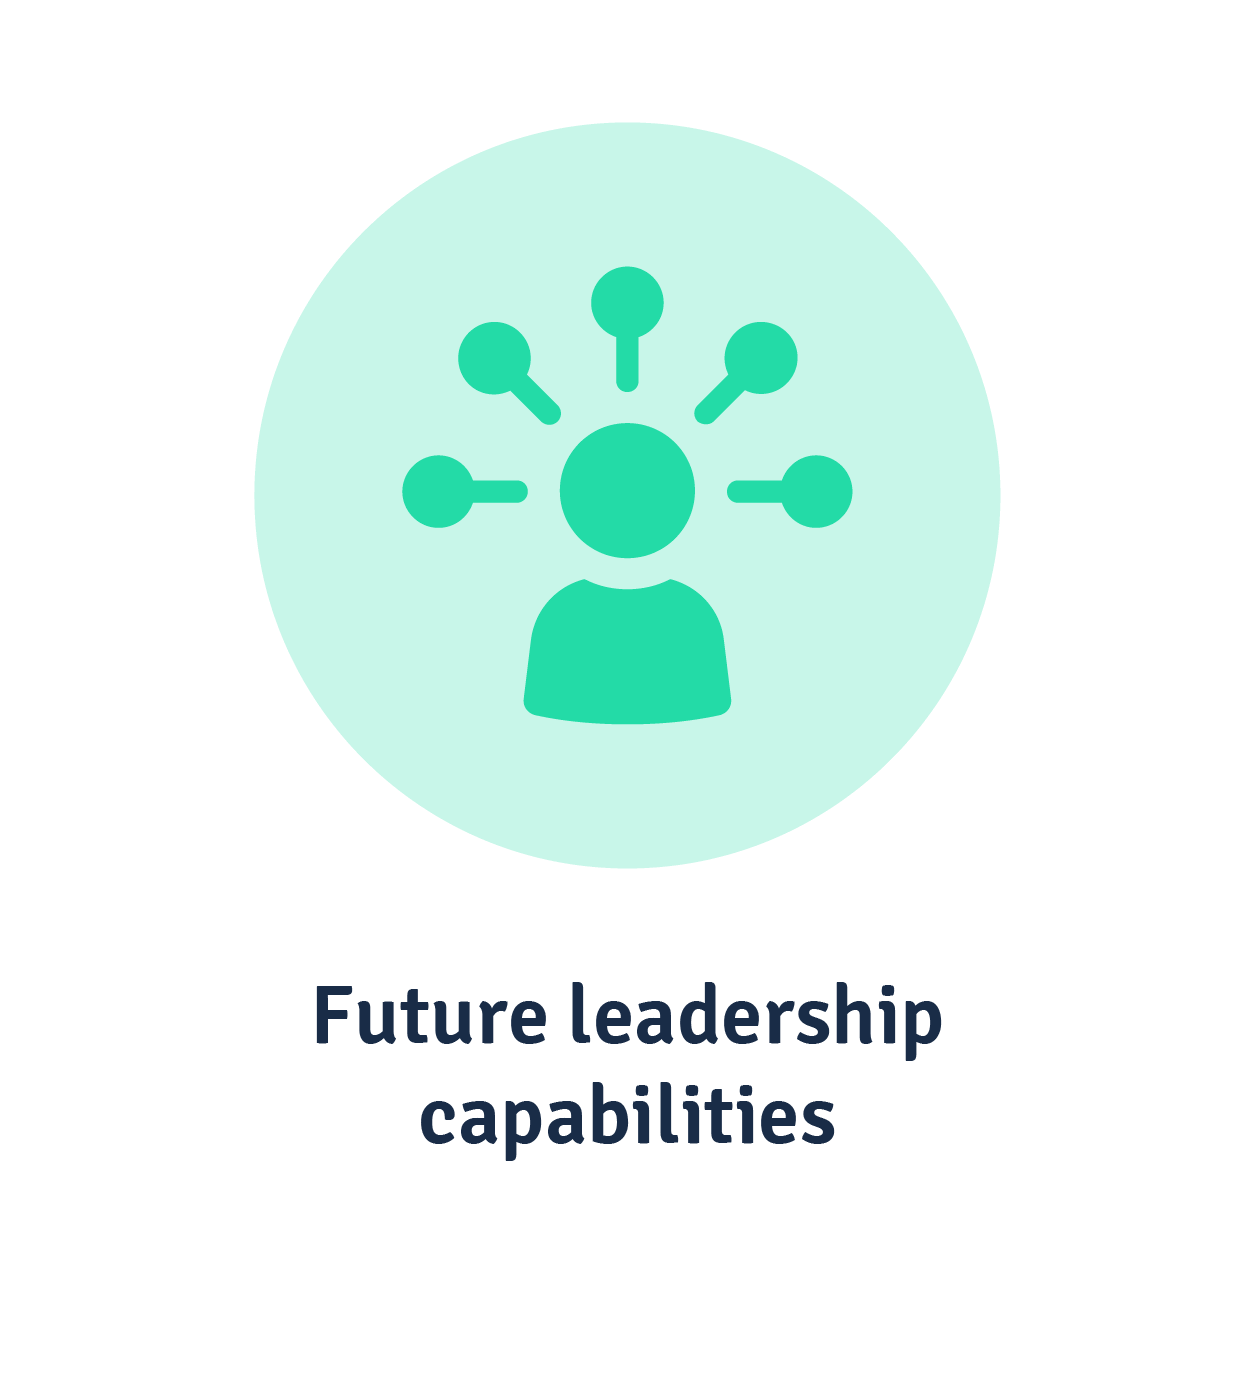 Future leadership capabilities